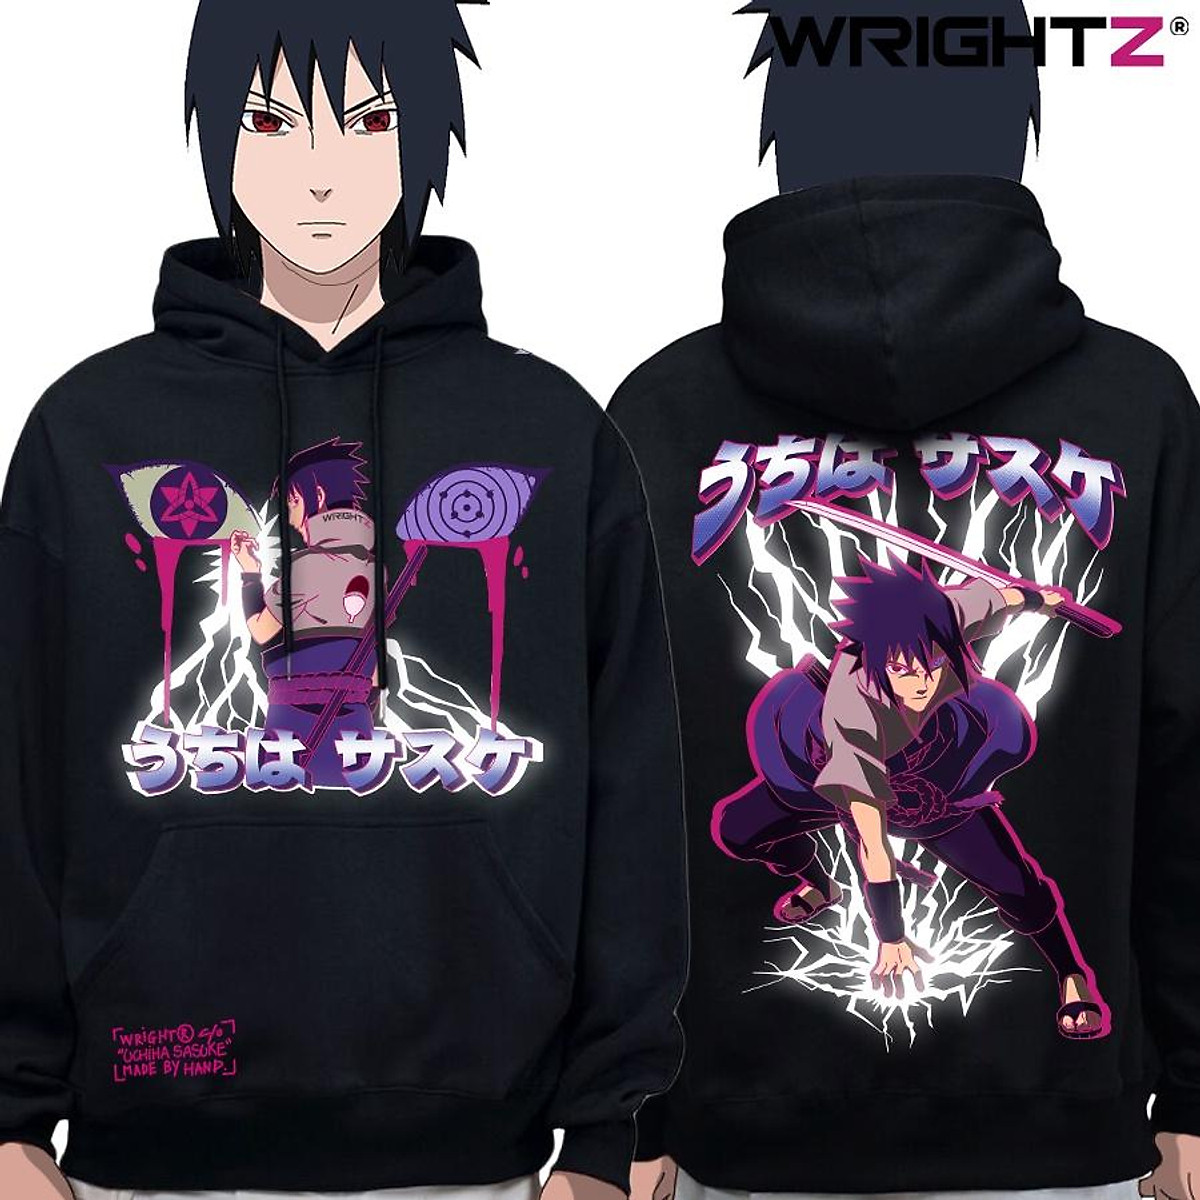 Áo hoodie Wrightz anime manga naruto uchiha sasuke saringan hình ...